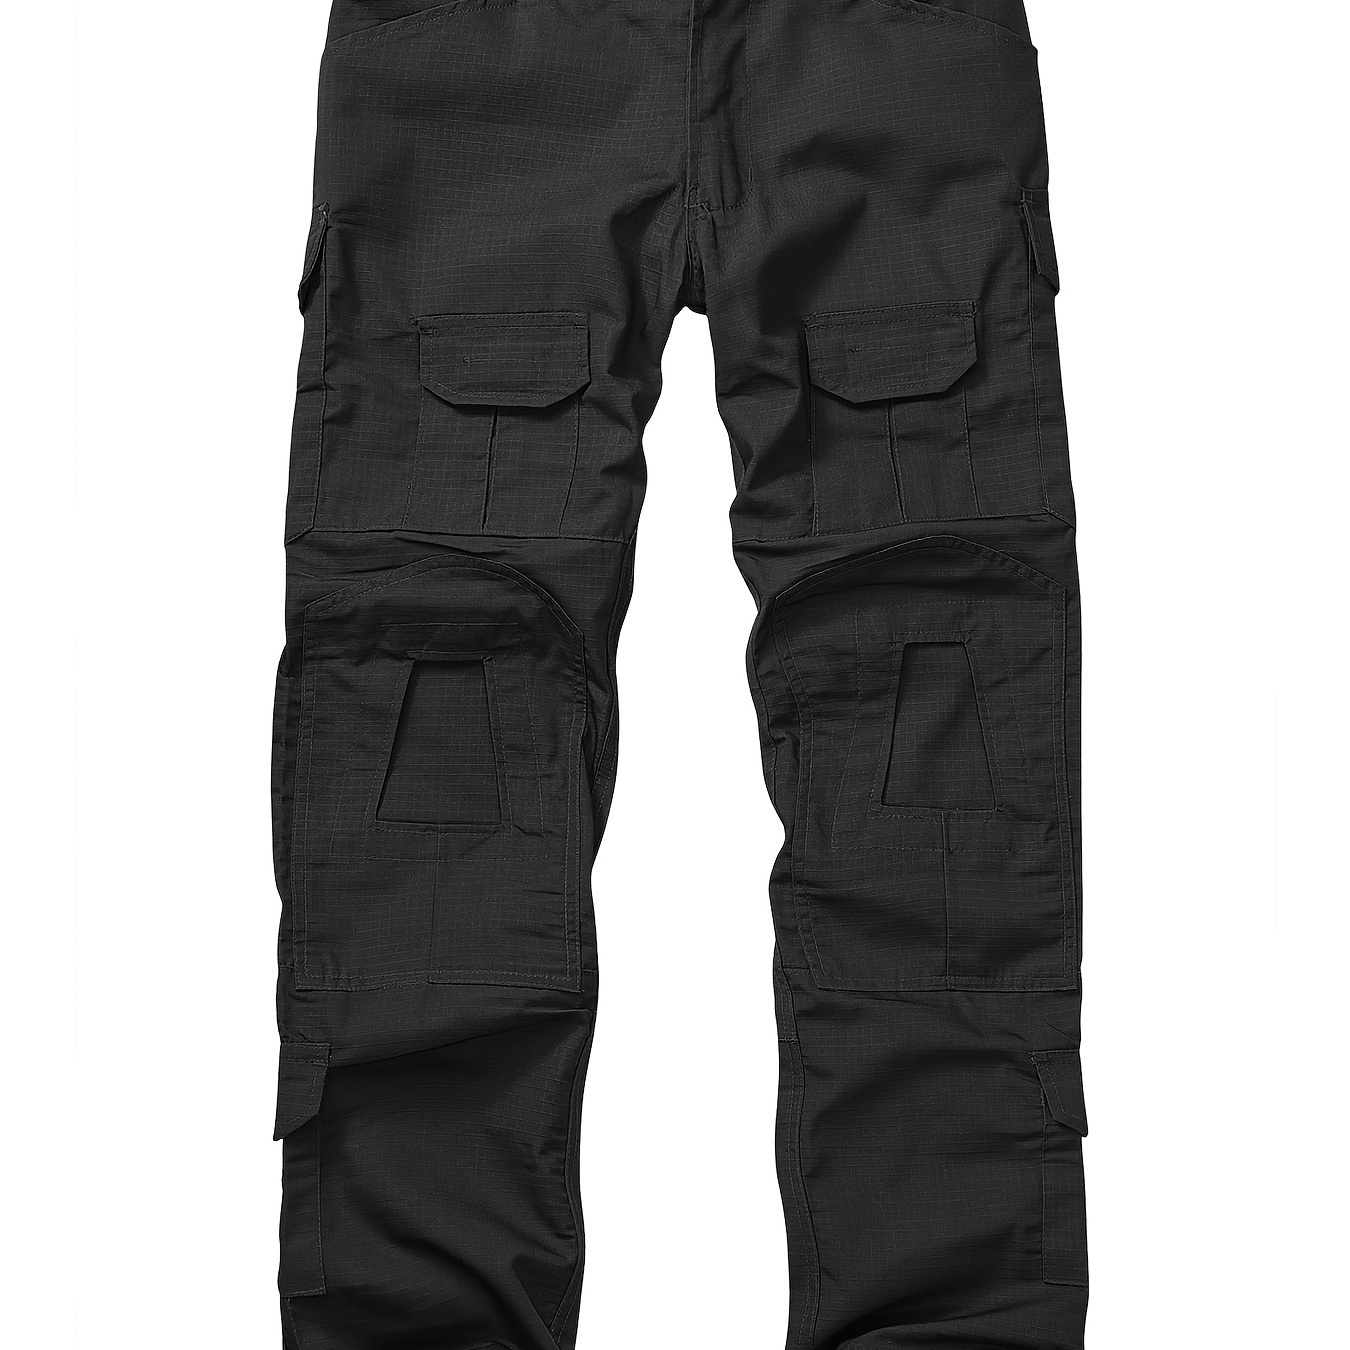 

Men's Hiking Pants, Ripstop Camo Cargo Pants, Multi-pocket Casual Work Pants